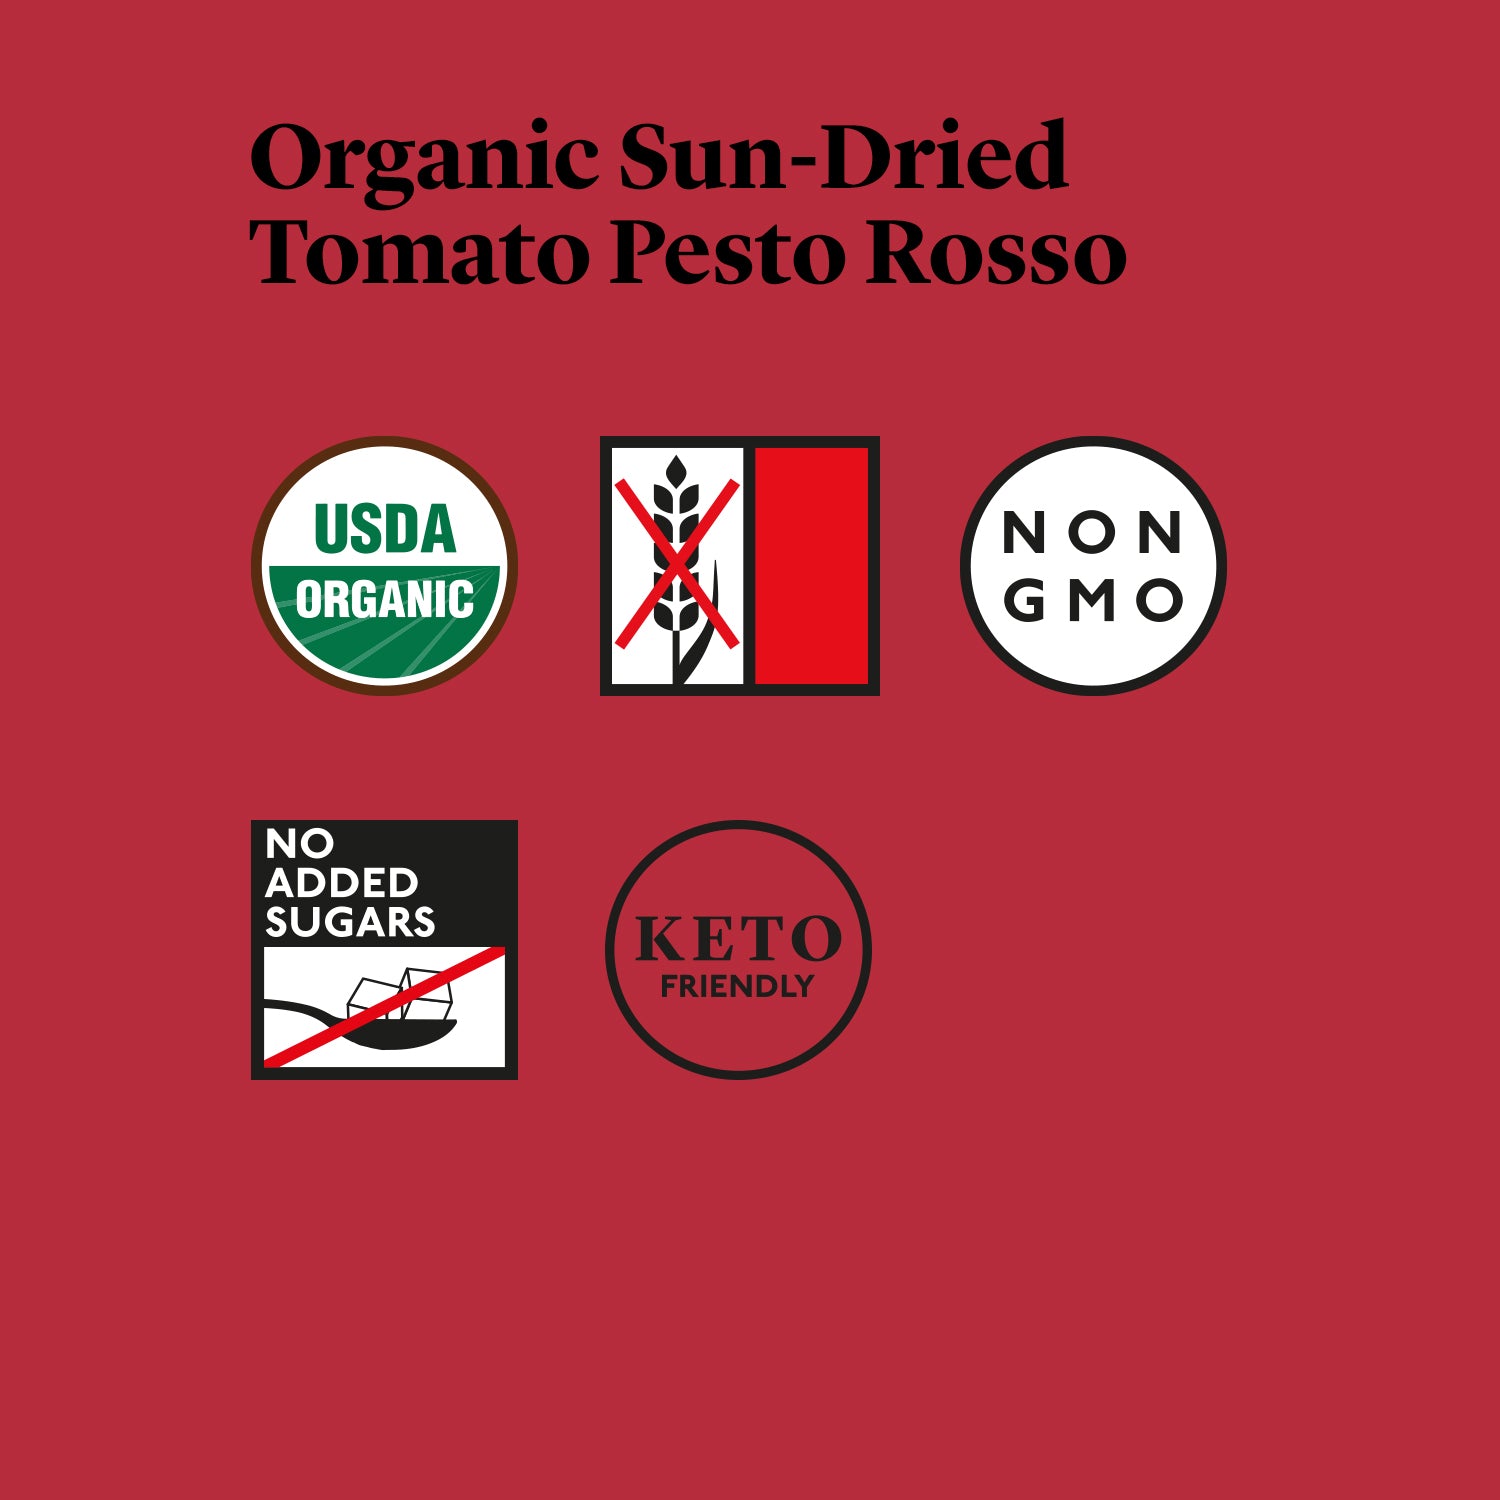 Delicious & Sons Organic Sun-Dried Tomato Pesto Rosso 6.70 oz 3 Pack - Mercantile Mountain